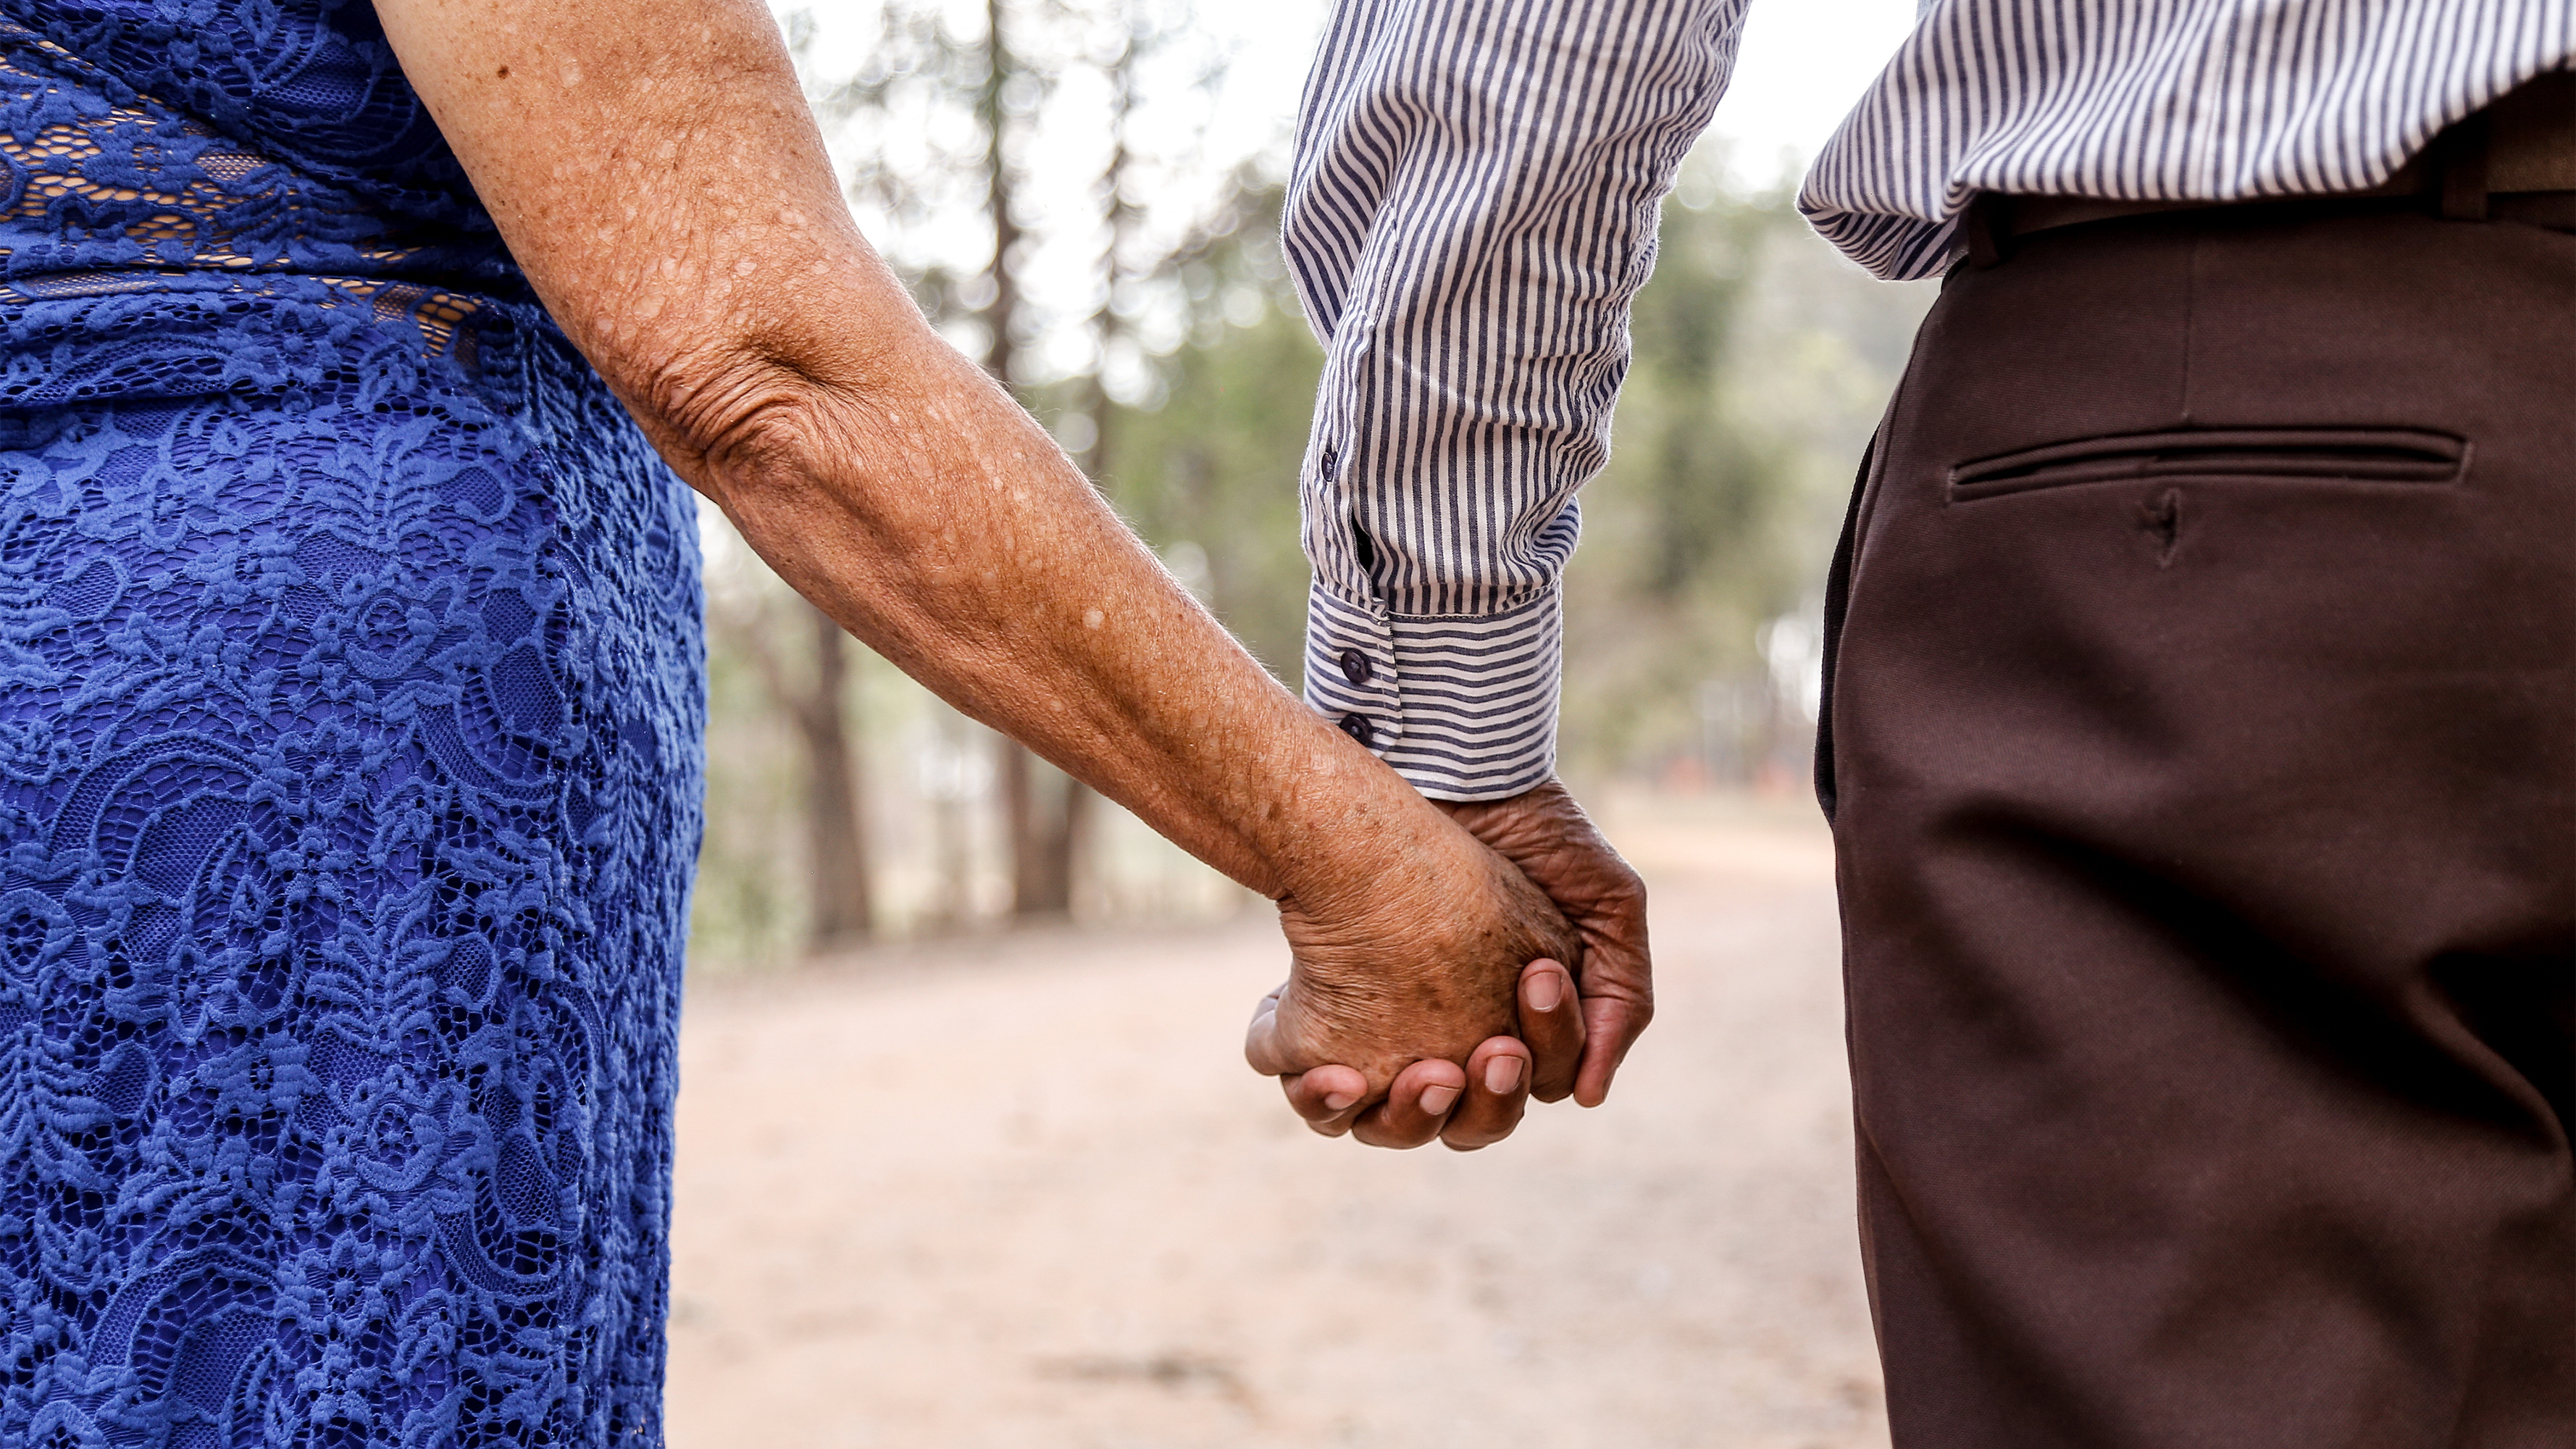 Older adults holding hands.